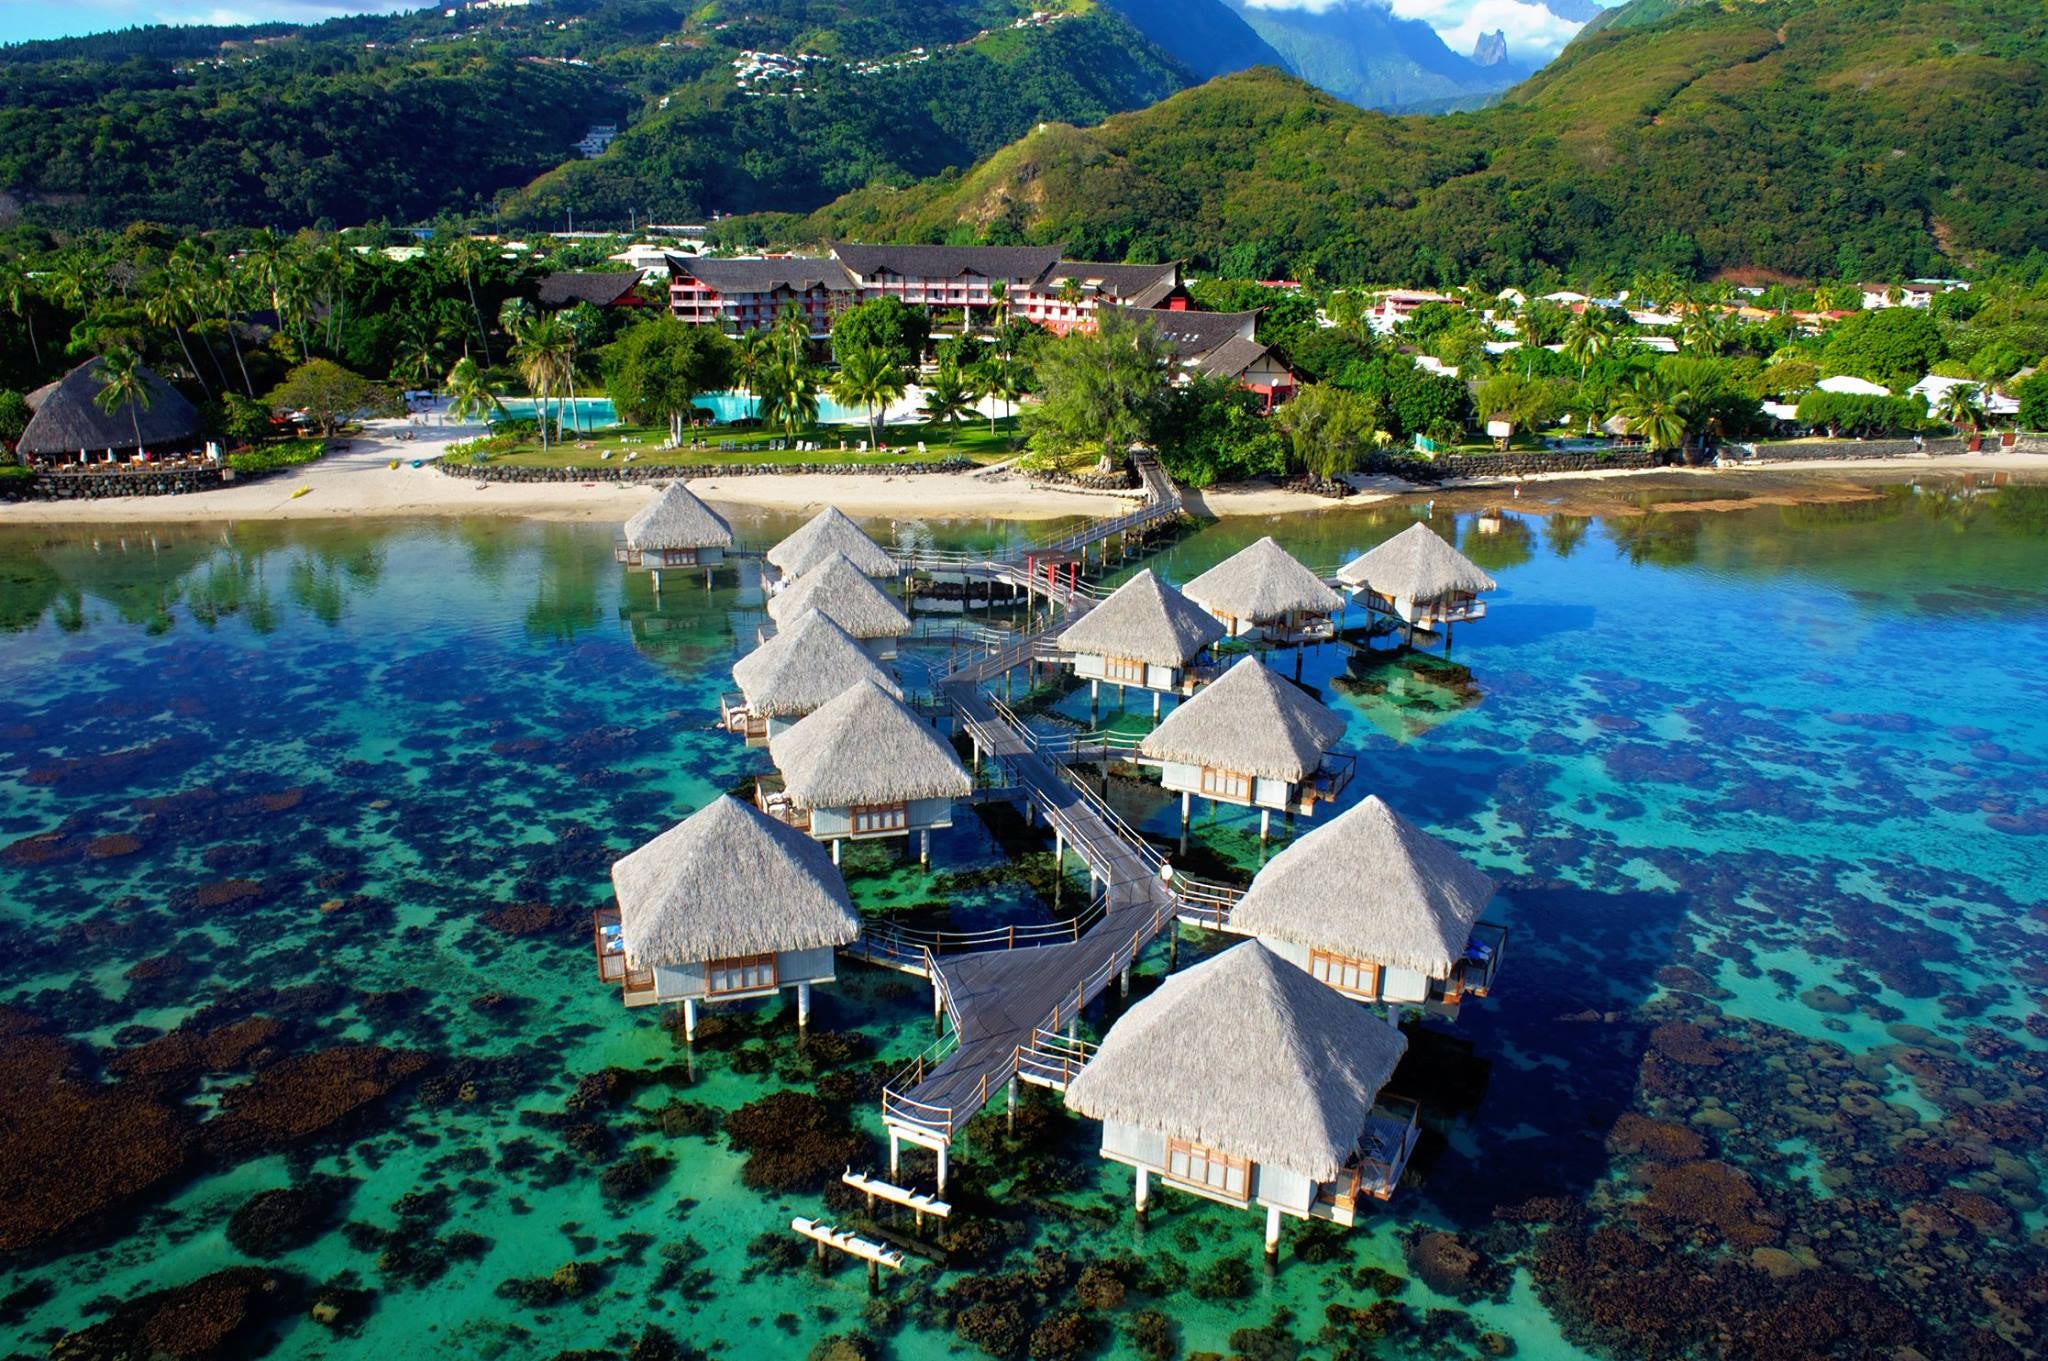 Курорт Таити, французская Полинезия